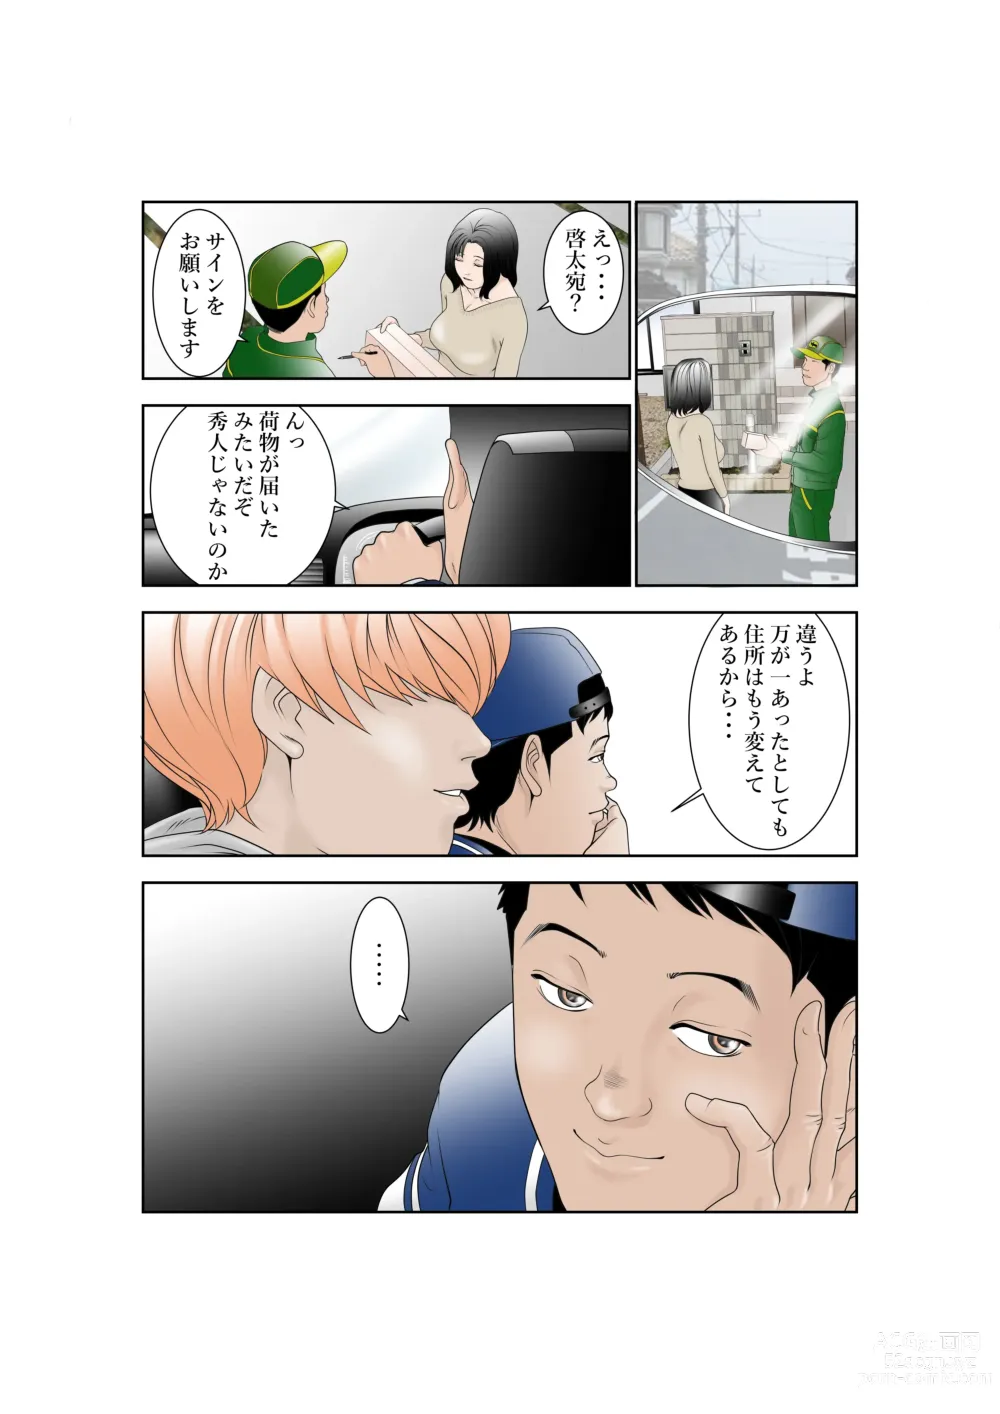 Page 3 of doujinshi Shiawase Kazoku no Sodate kata